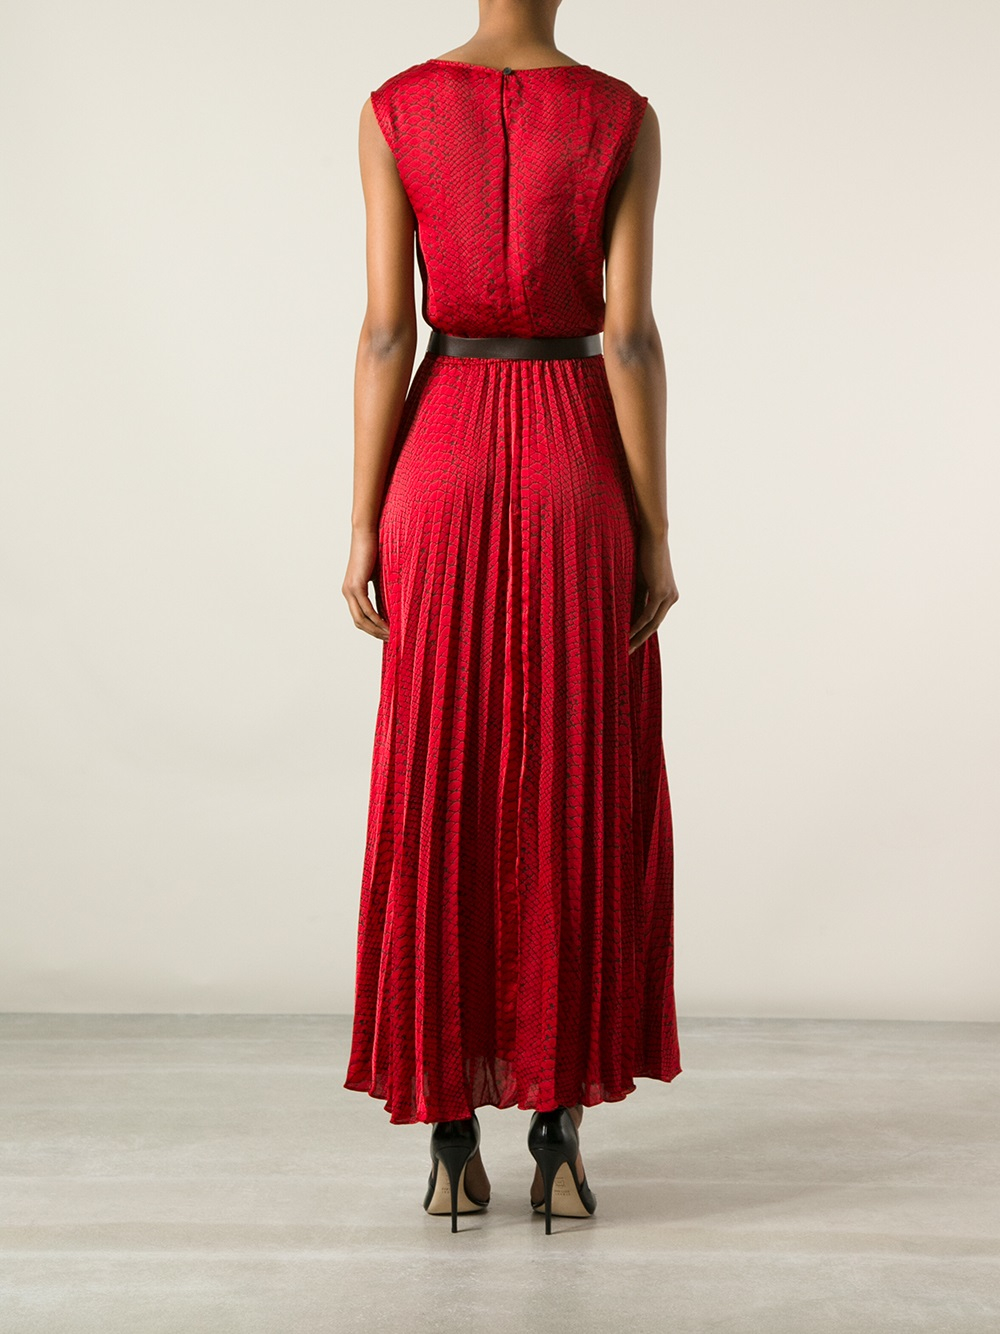 Michael michael kors Snake Skin Print Dress in Red | Lyst